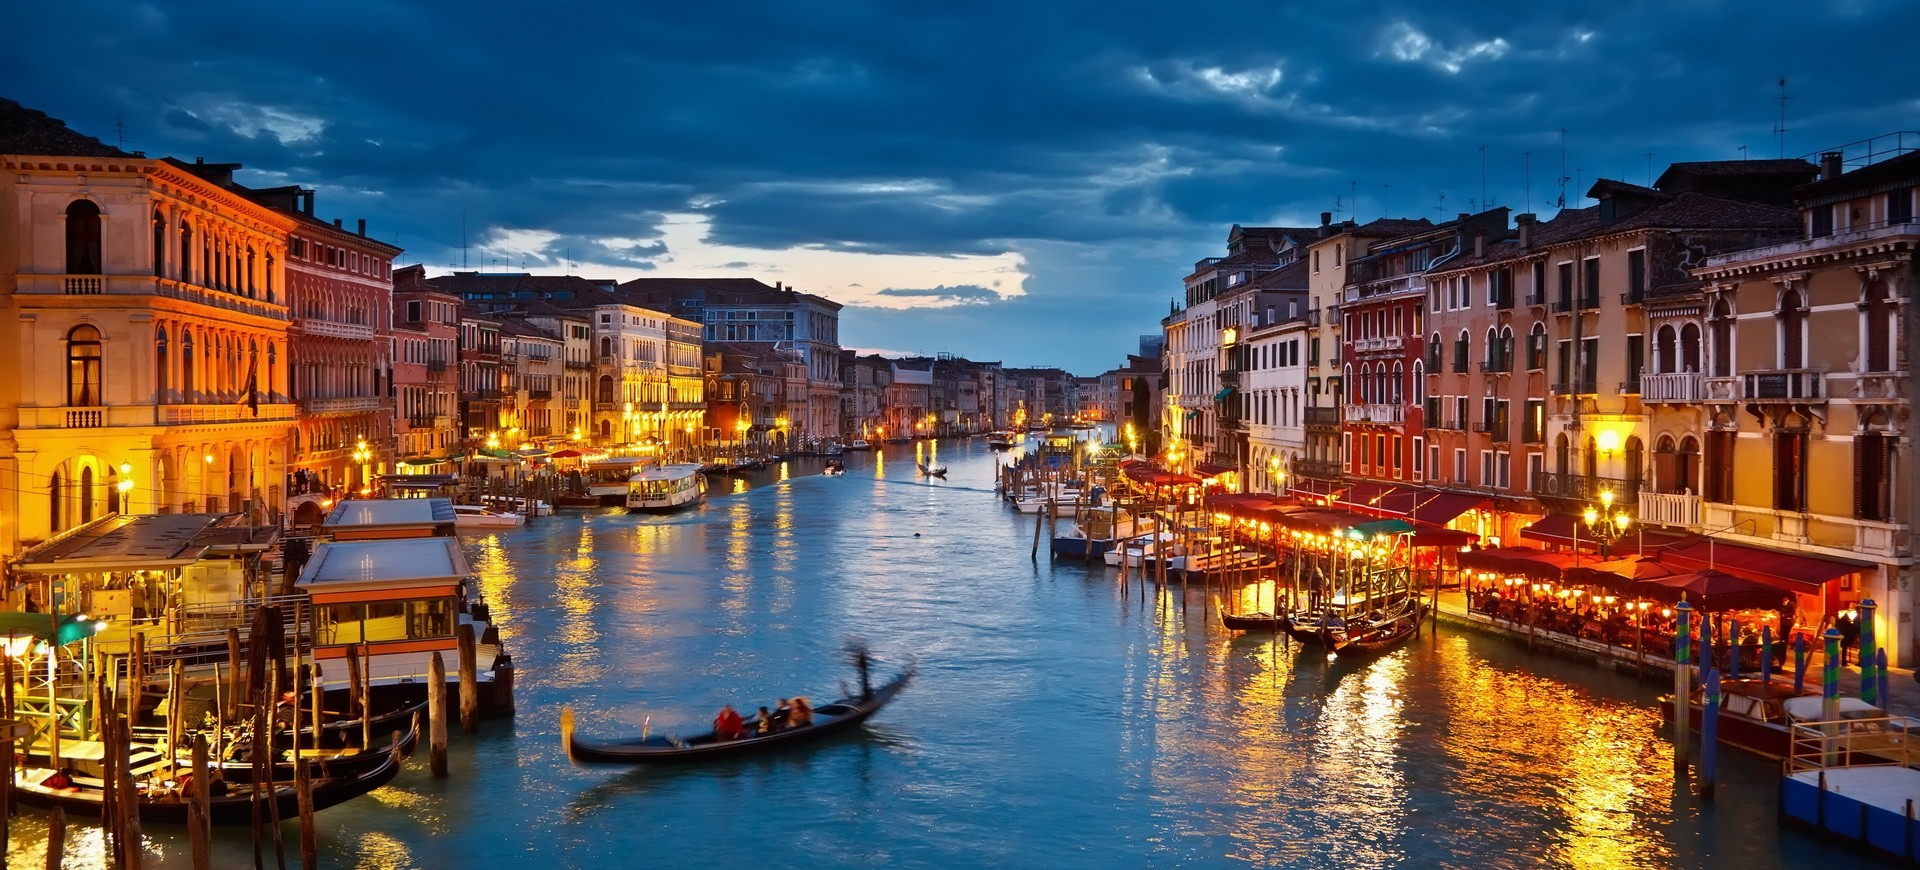 Venise by night depuis Pont Ryalto